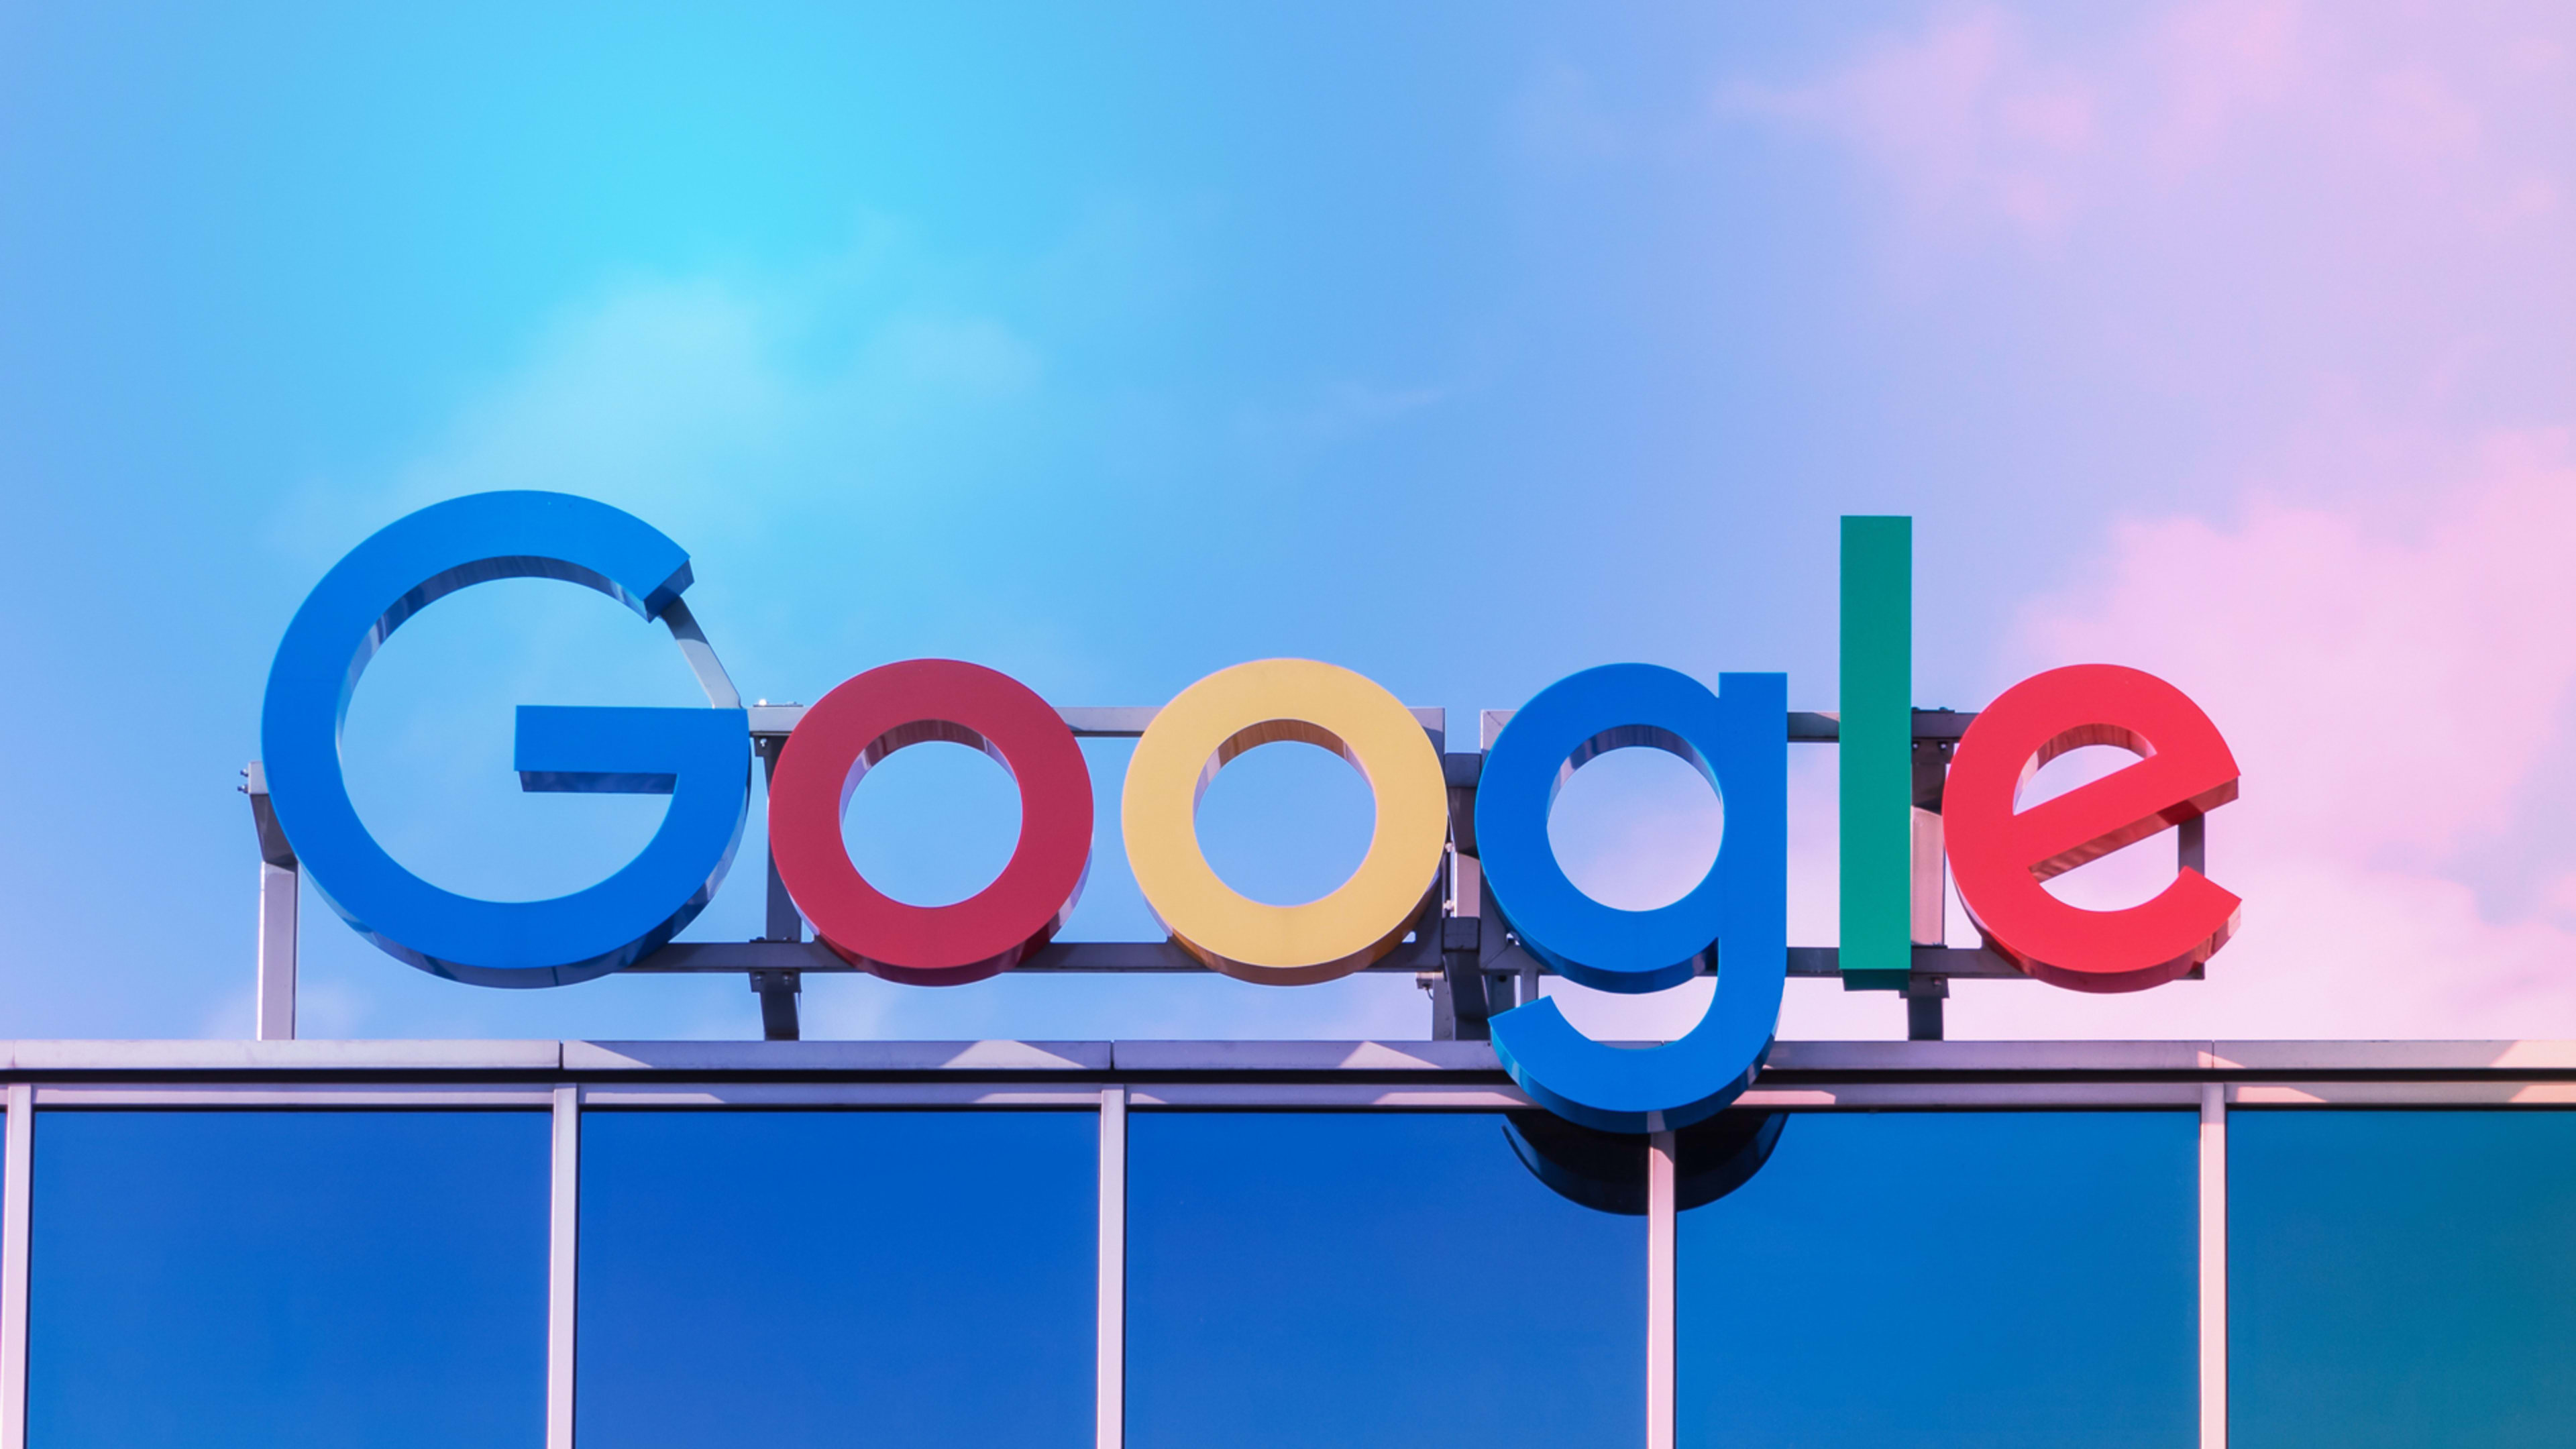 Google won’t face legal action over Safari data breach claims